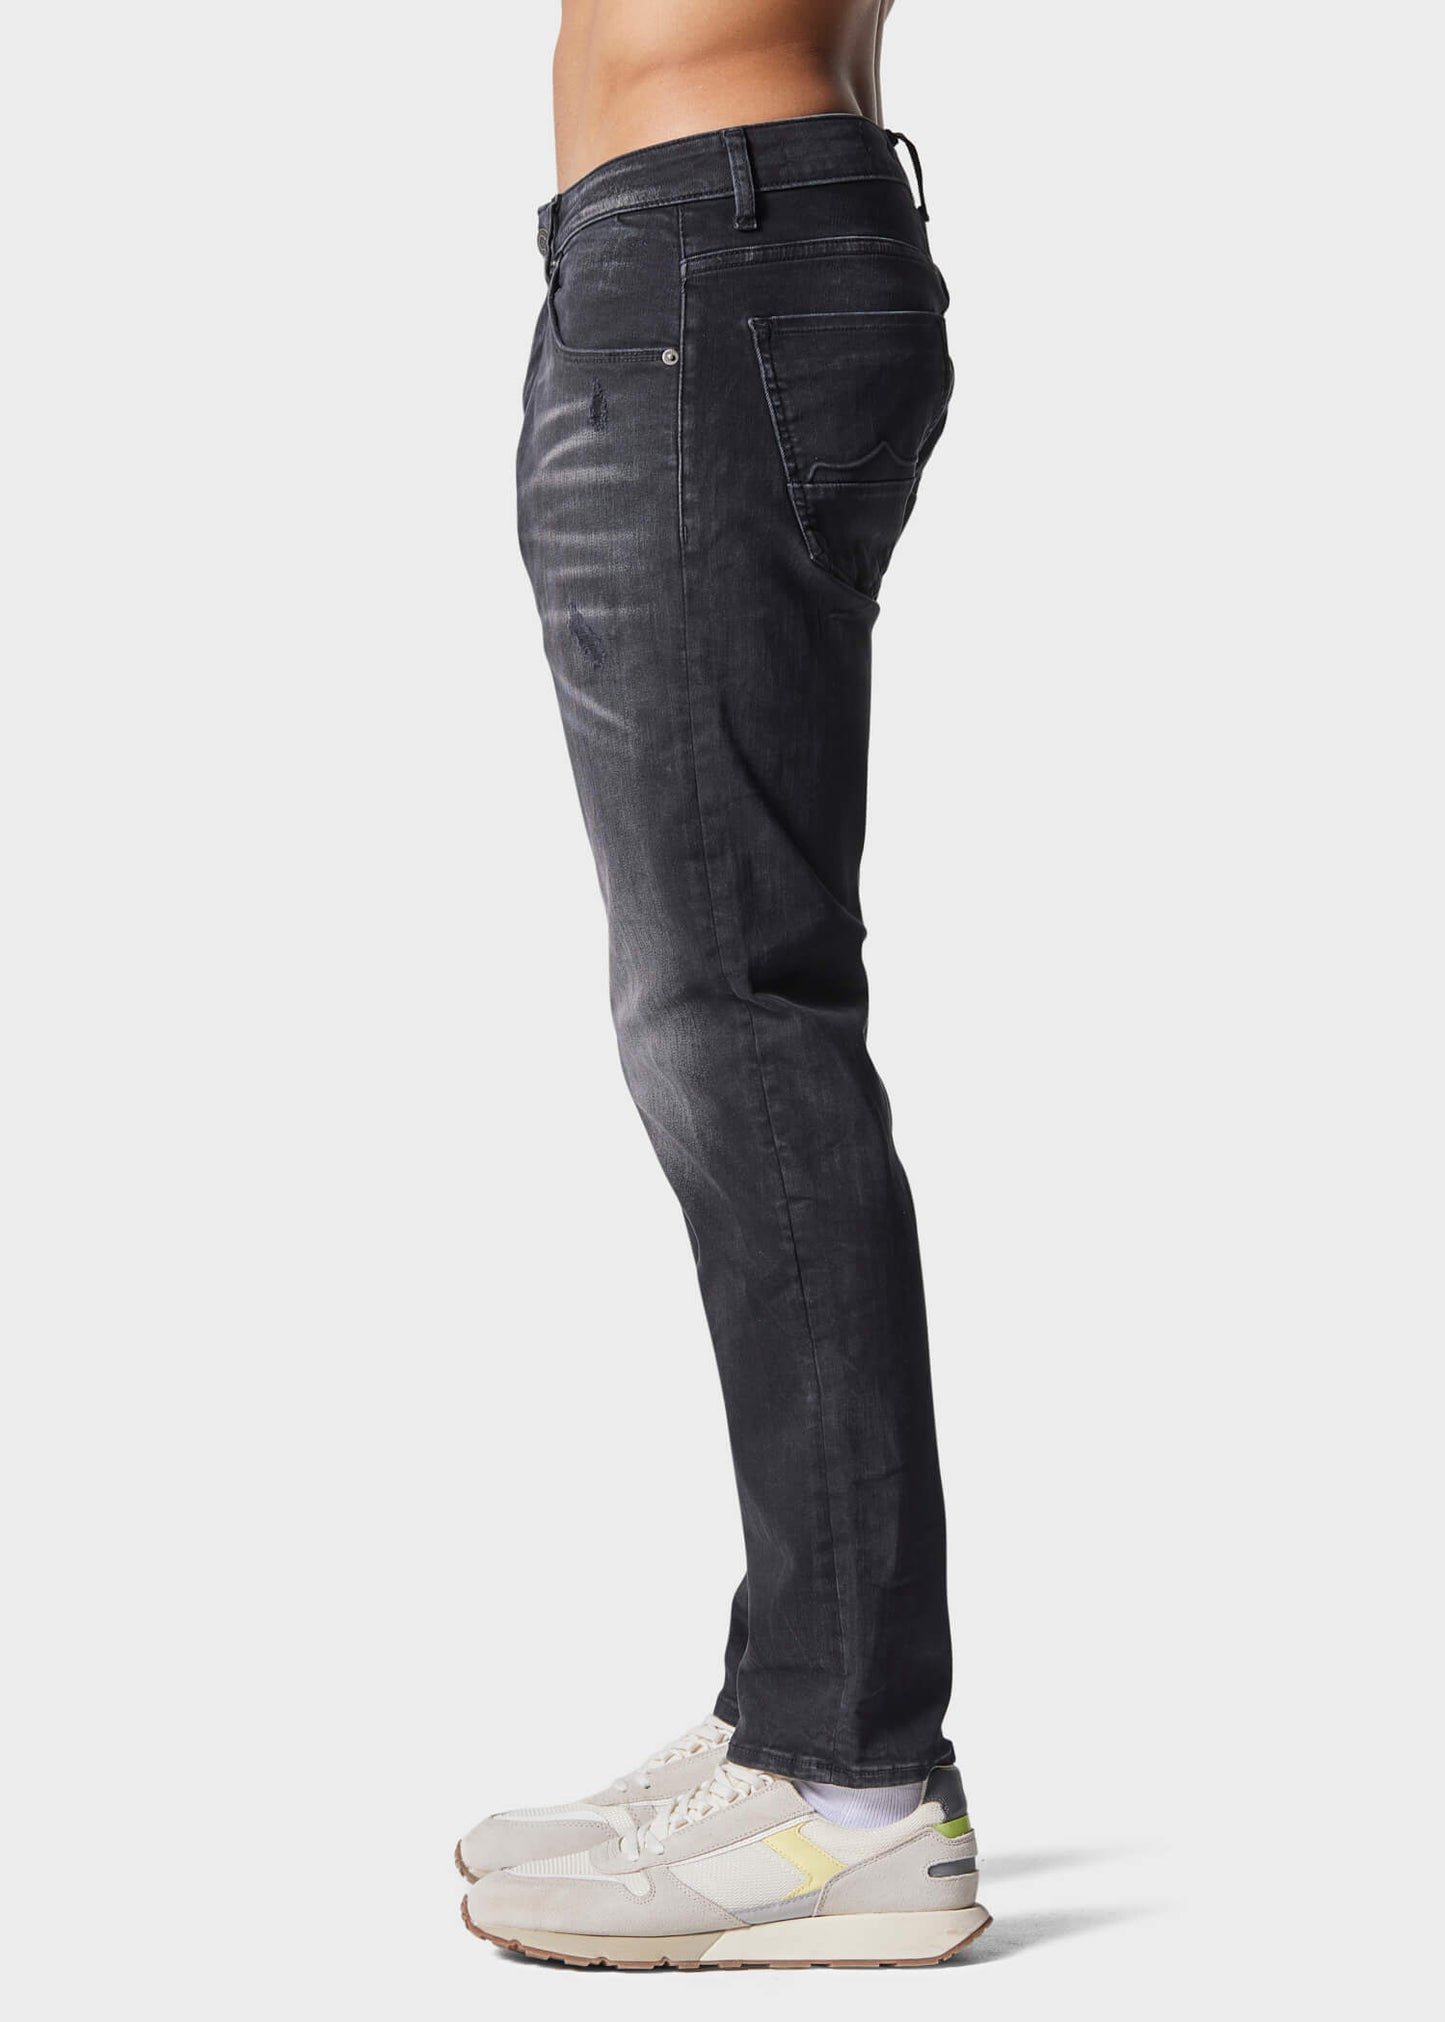 Cassady LAK 910 Regular Fit Jeans